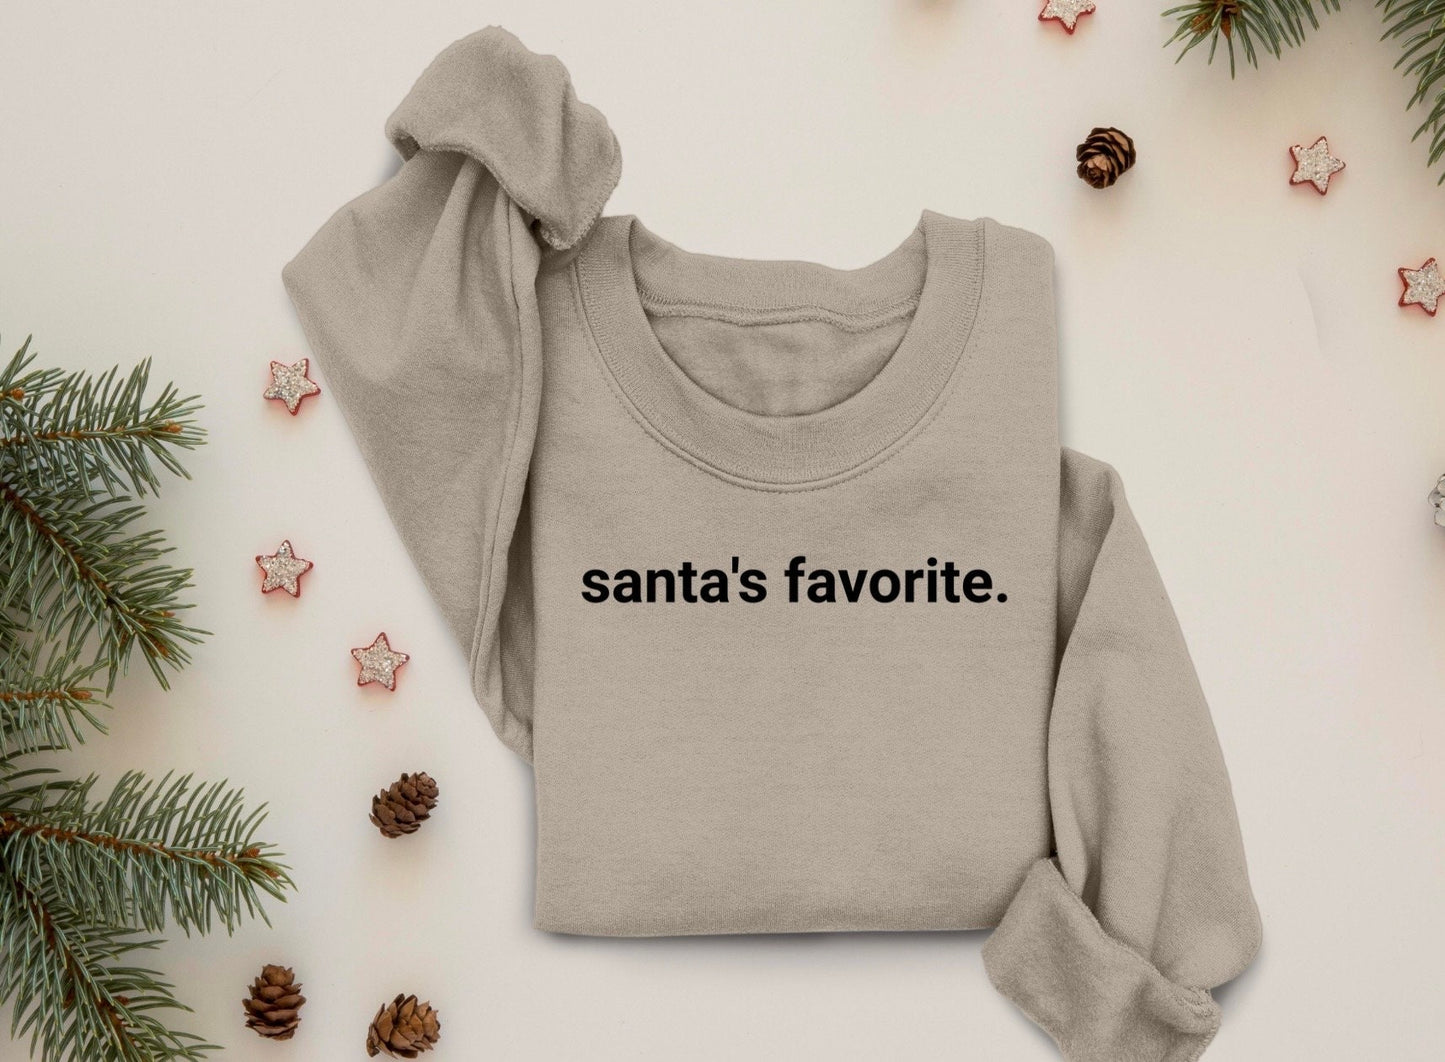 Santas Favorite Sweatshirt, Santas Favorite Shirt, Santas Favorite Crewneck, Santas Favorite Sweater, Oversized Sweater, Comfy Sweatshirt